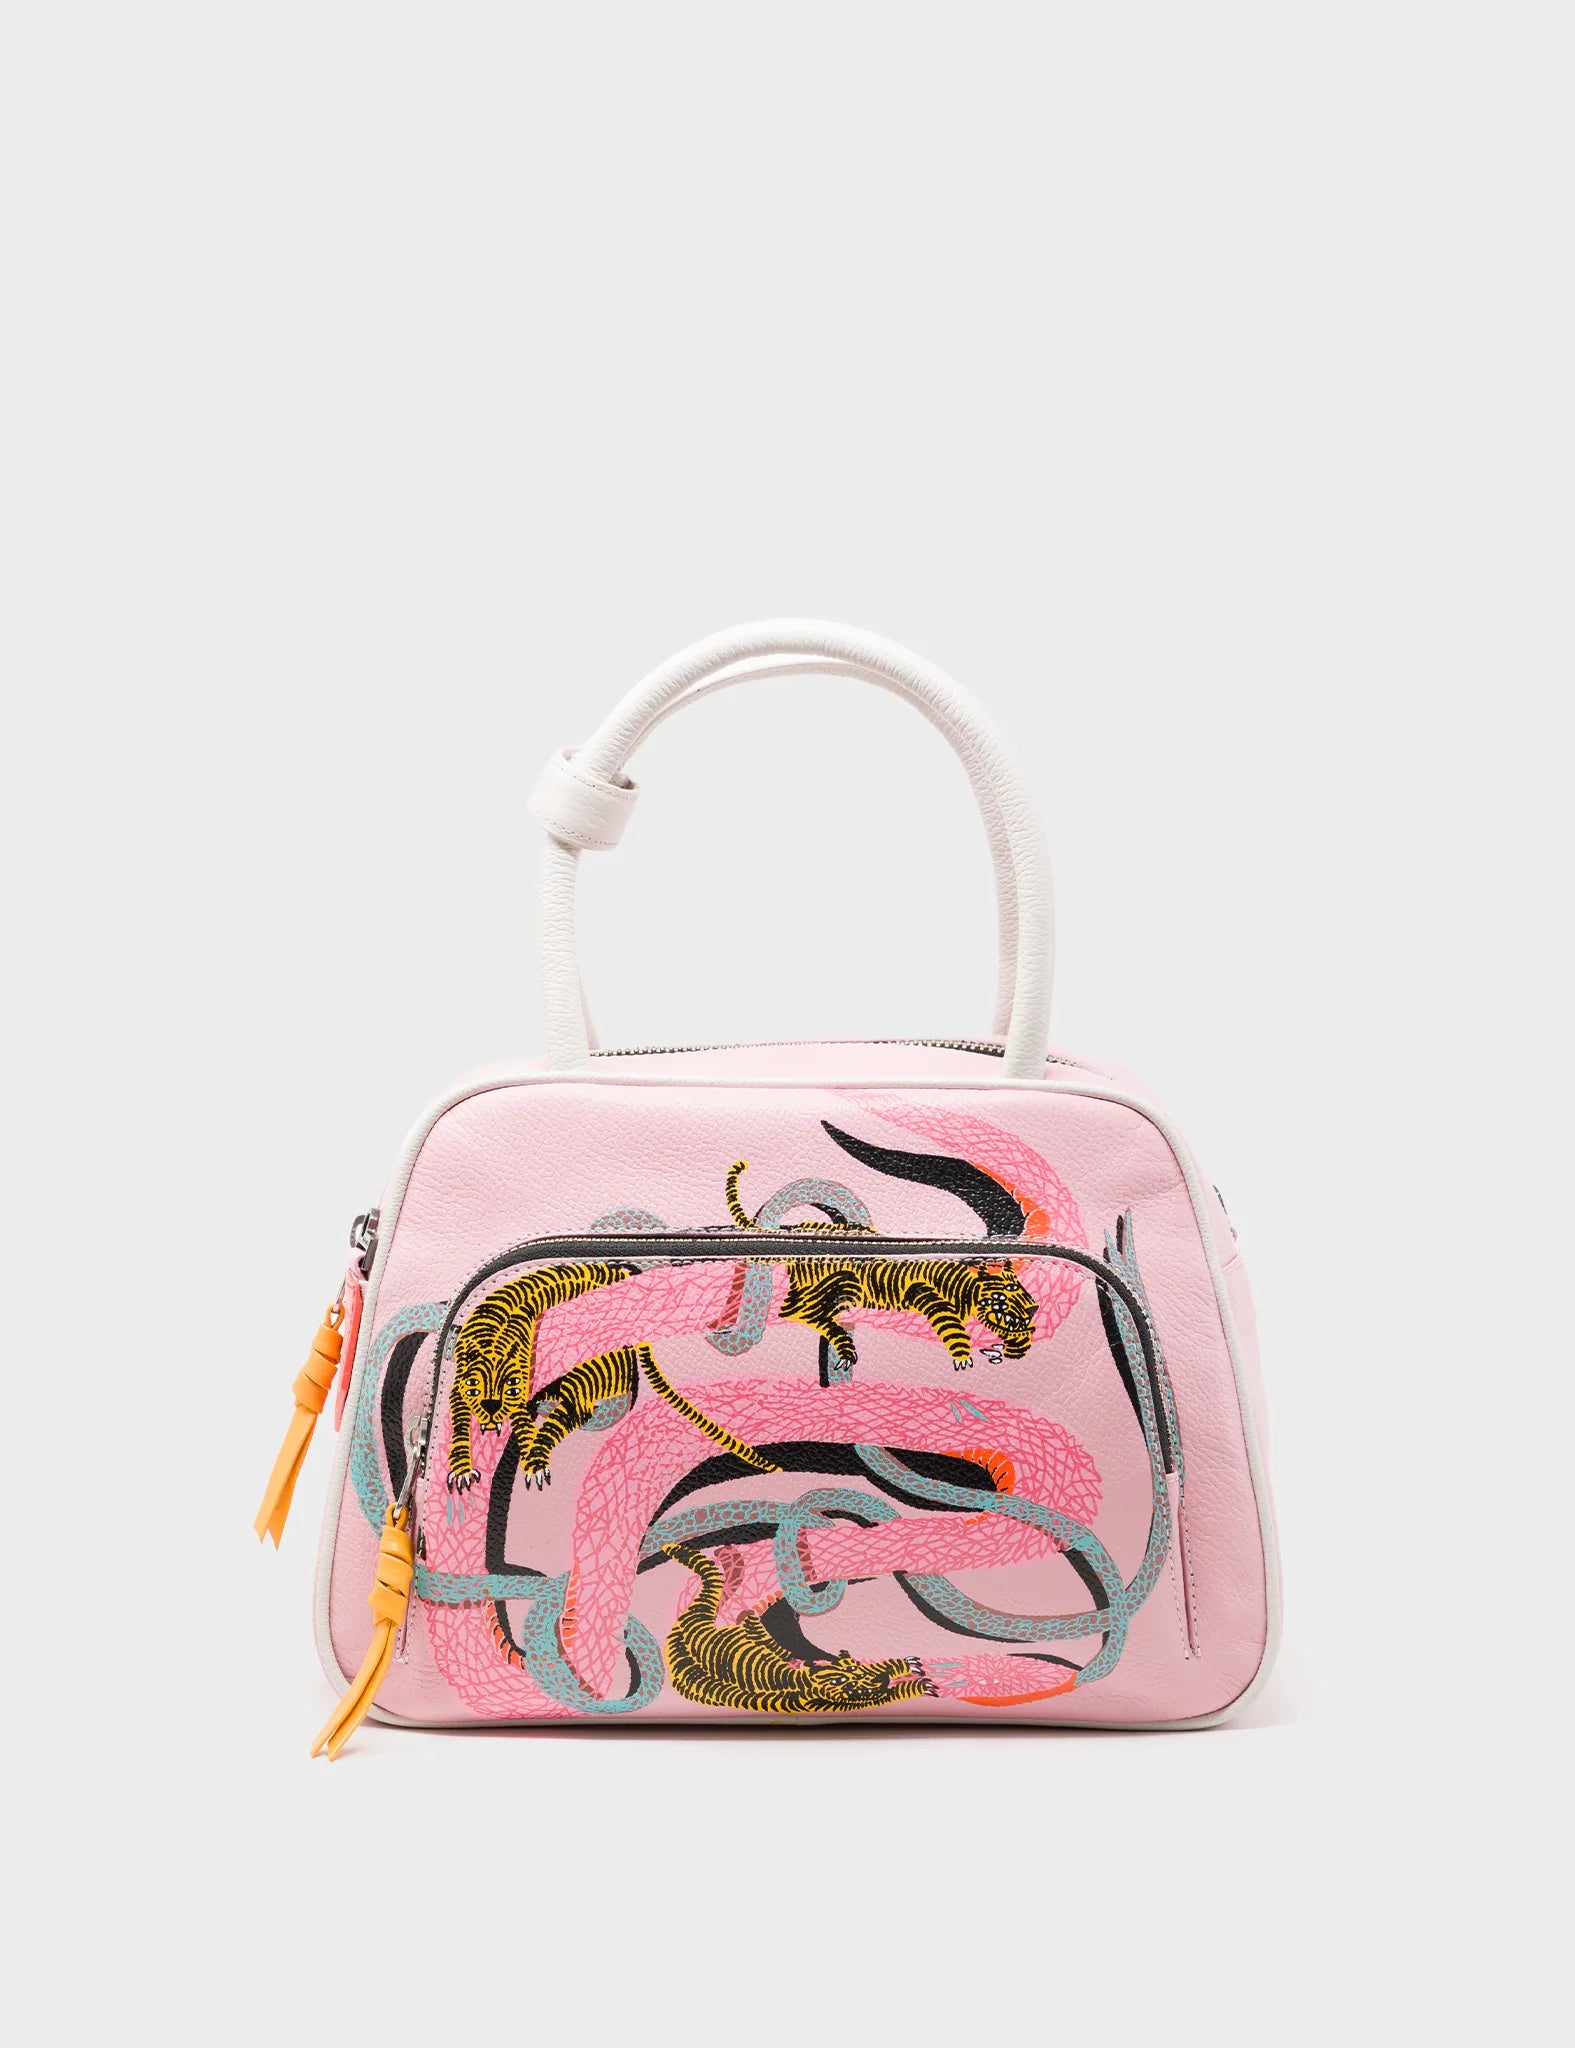 Medium Crossbody Blush Pink Leather Bag - Tiger And Snake Print - Front